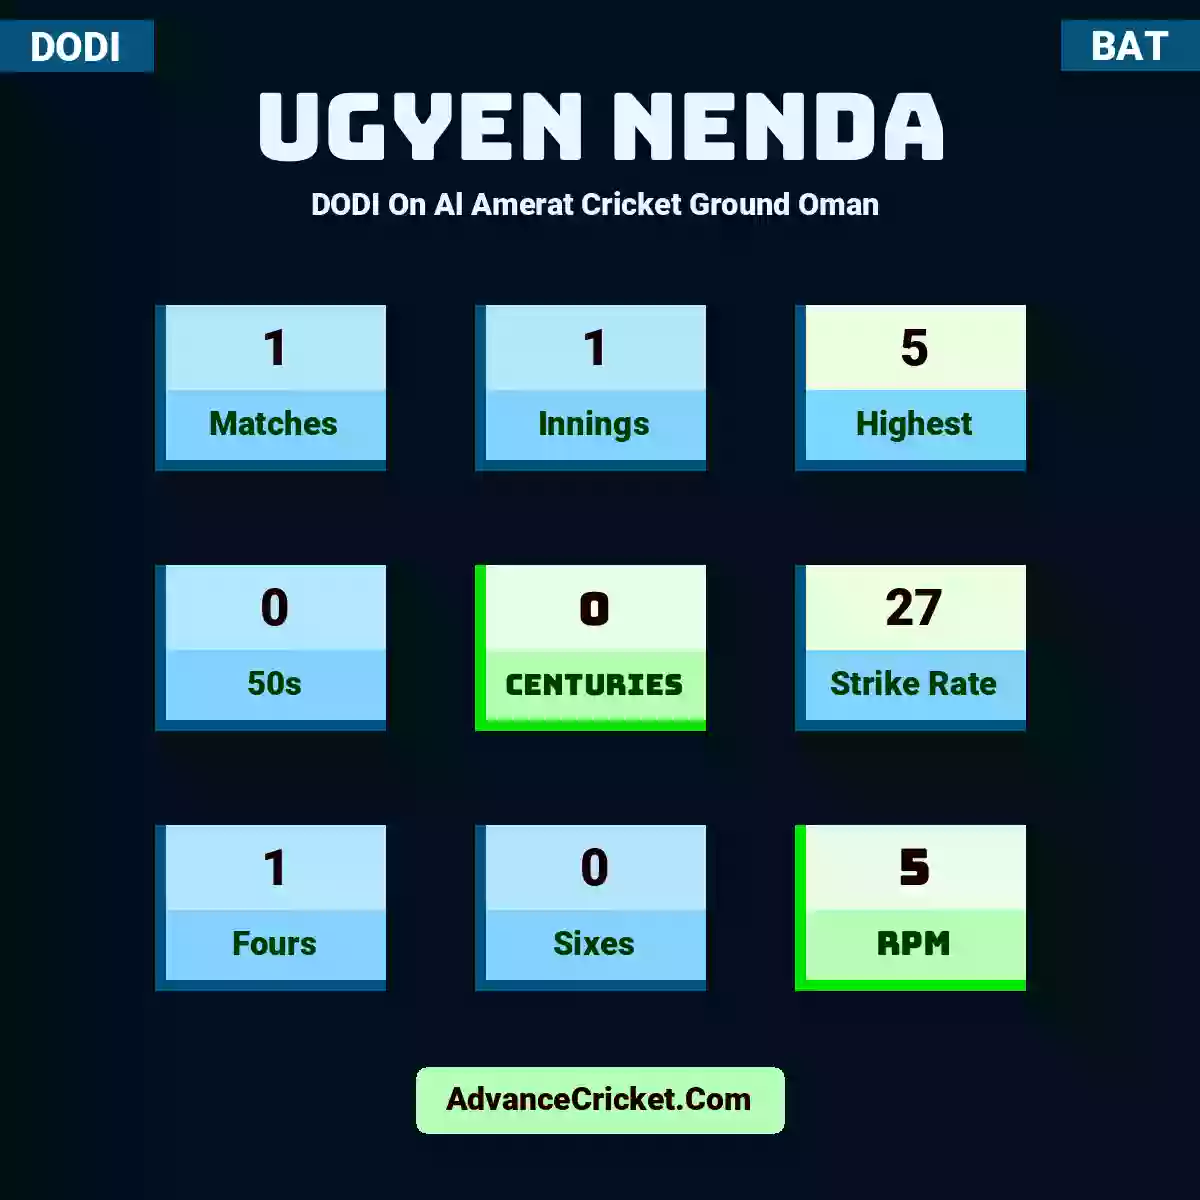 Ugyen Nenda DODI  On Al Amerat Cricket Ground Oman , Ugyen Nenda played 1 matches, scored 2 runs as highest, 0 half-centuries, and 0 centuries, with a strike rate of 14. U.Nenda hit 0 fours and 0 sixes, with an RPM of 2.